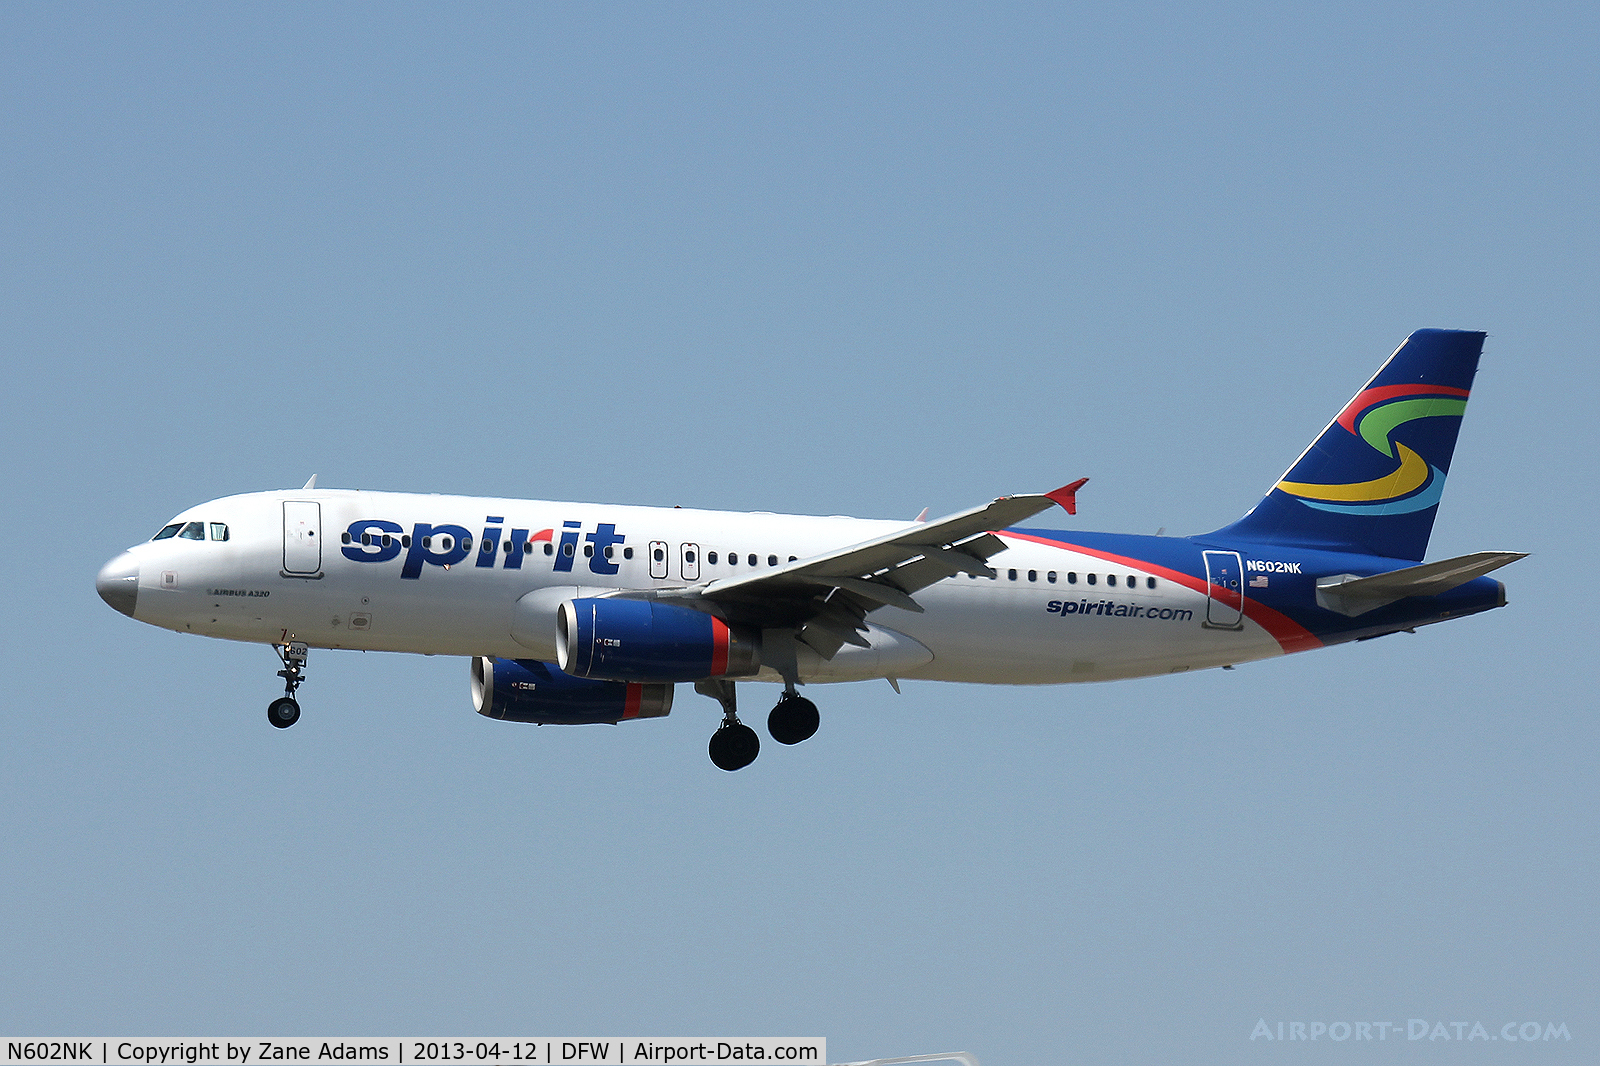 N602NK, 2010 Airbus A320-232 C/N 4264, Spirit Airlines landing at DFW Airport